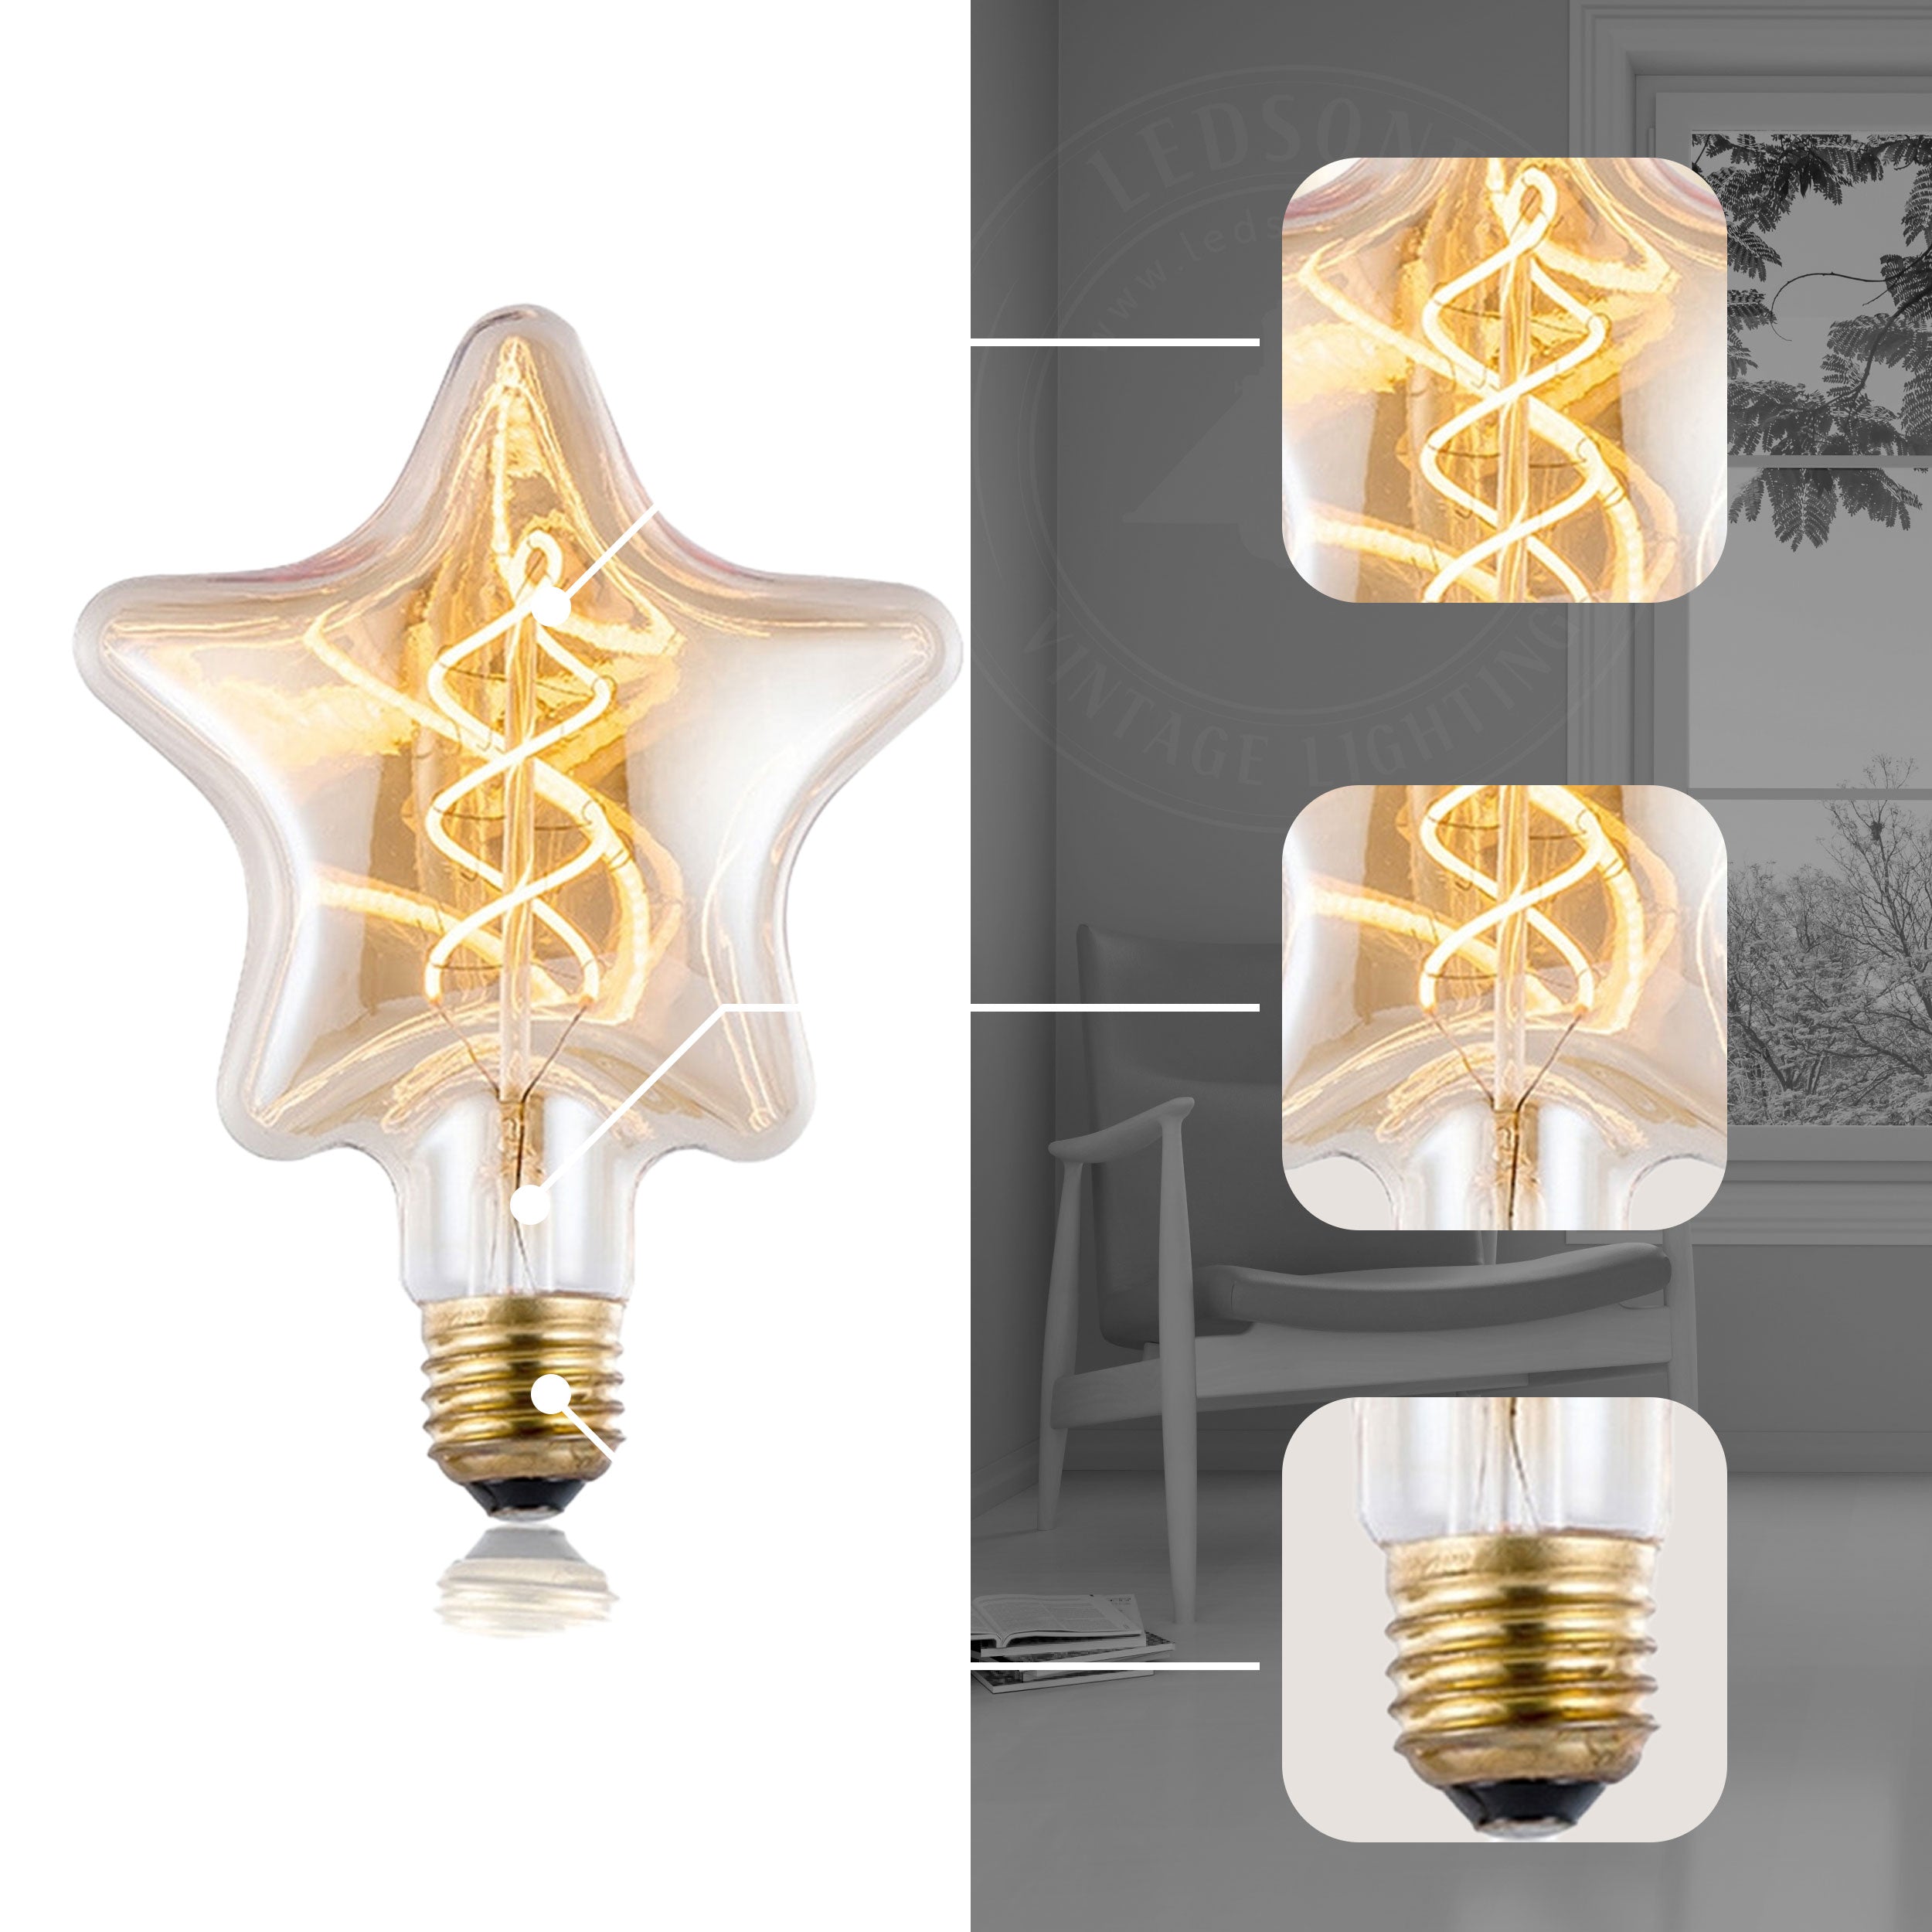 Vintage Retro style E27 Edison Screw Amber Glass light Bulbs, Warm White Colour Indoor decorative Lamp